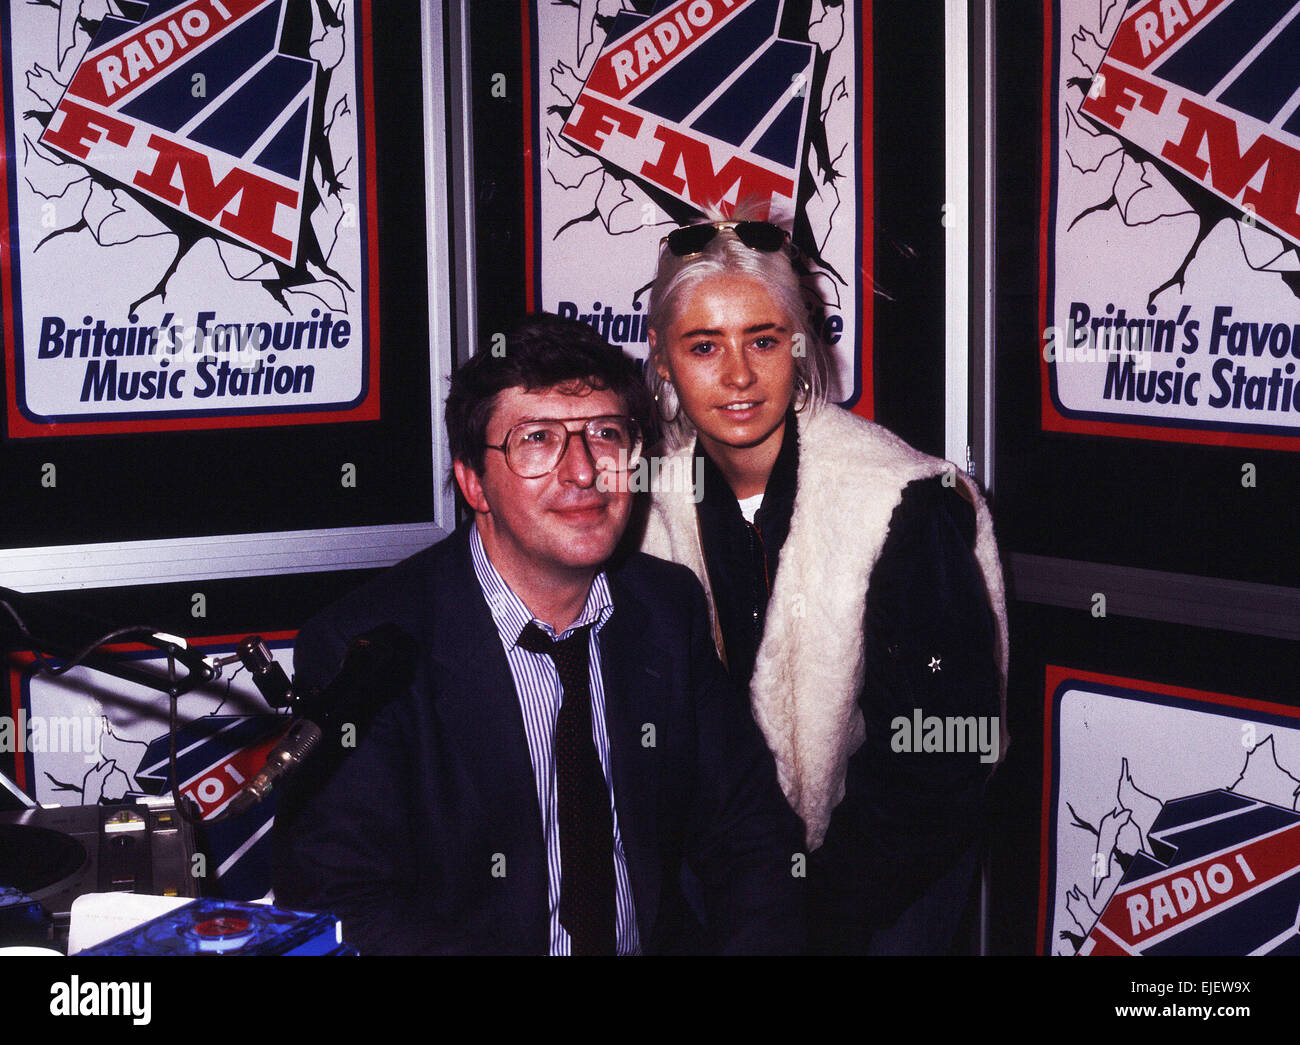 Transvision Vamp singer Wendy James with Radio 1 deejay Simon Bates in  Croydon UK circa 1989 Stock Photo - Alamy